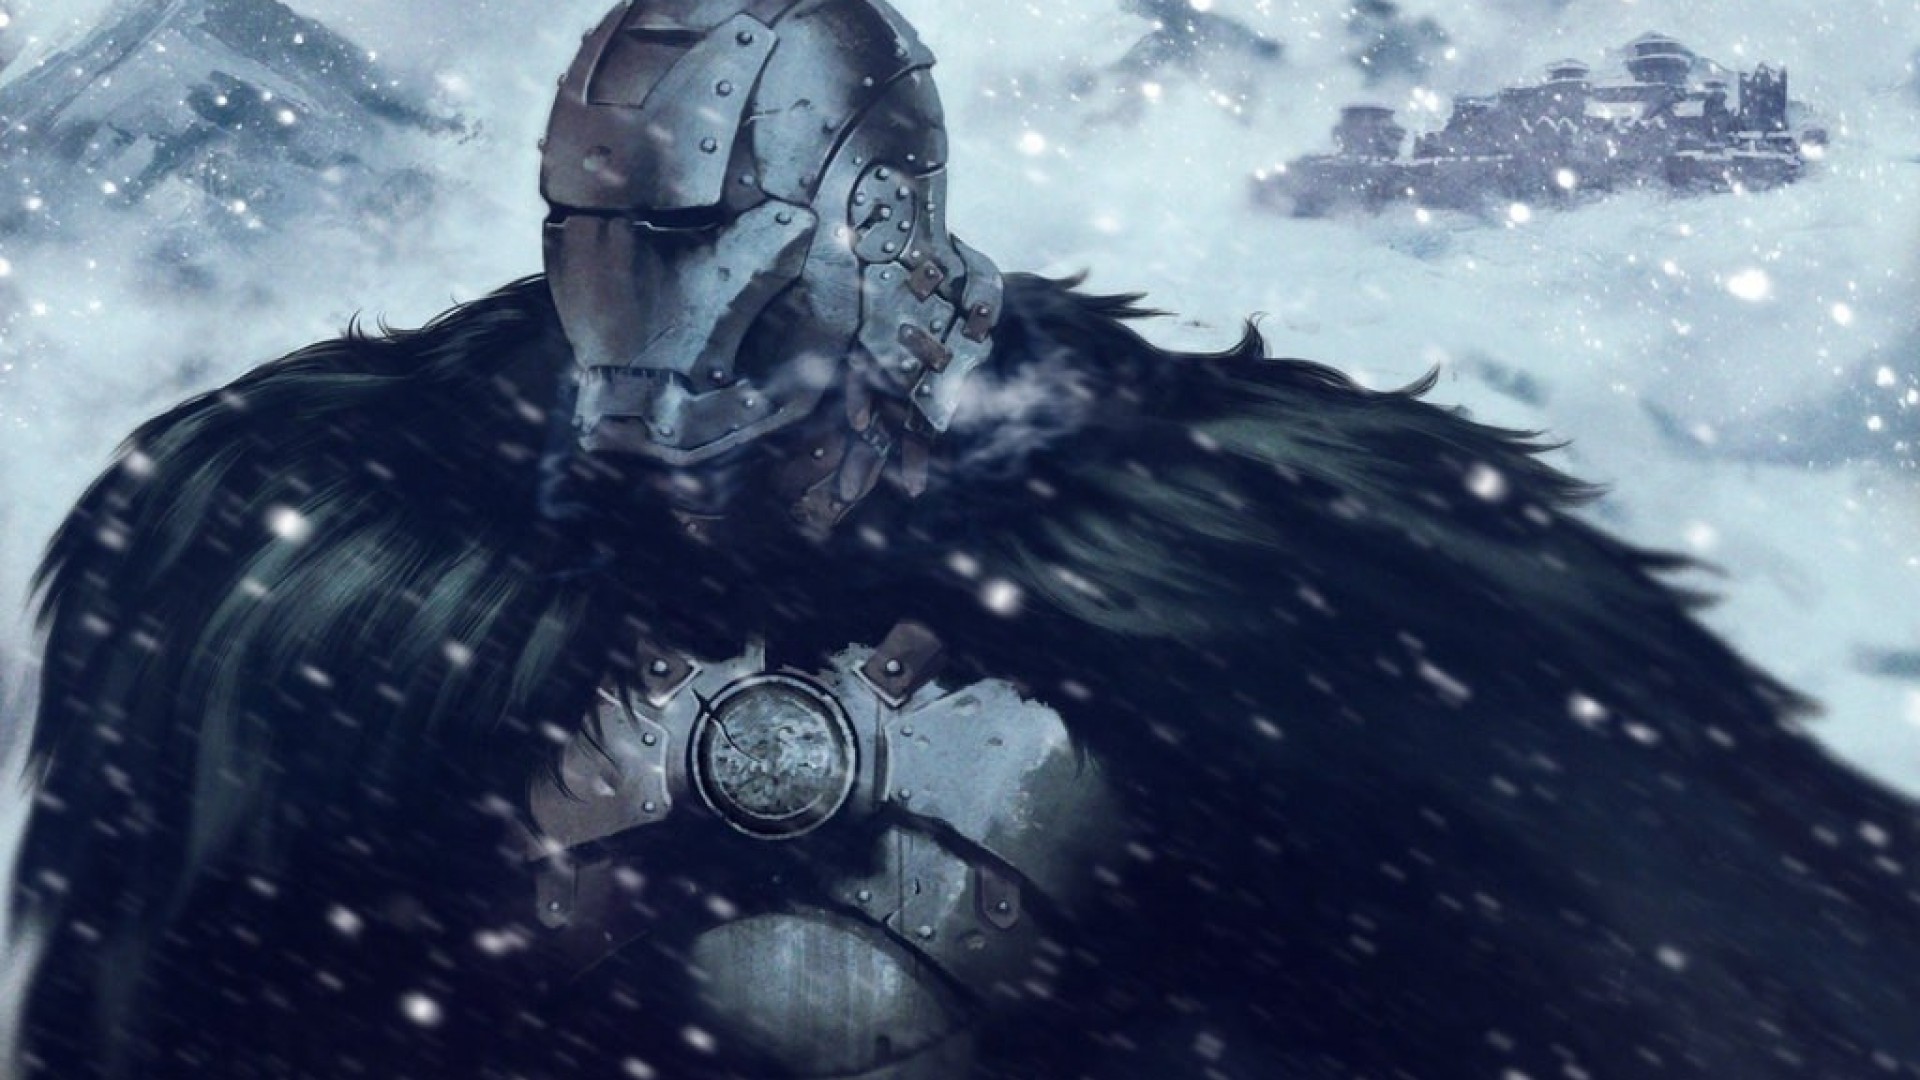 General 1920x1080 Game of Thrones Iron Man crossover snow House Stark fantasy art artwork fan art